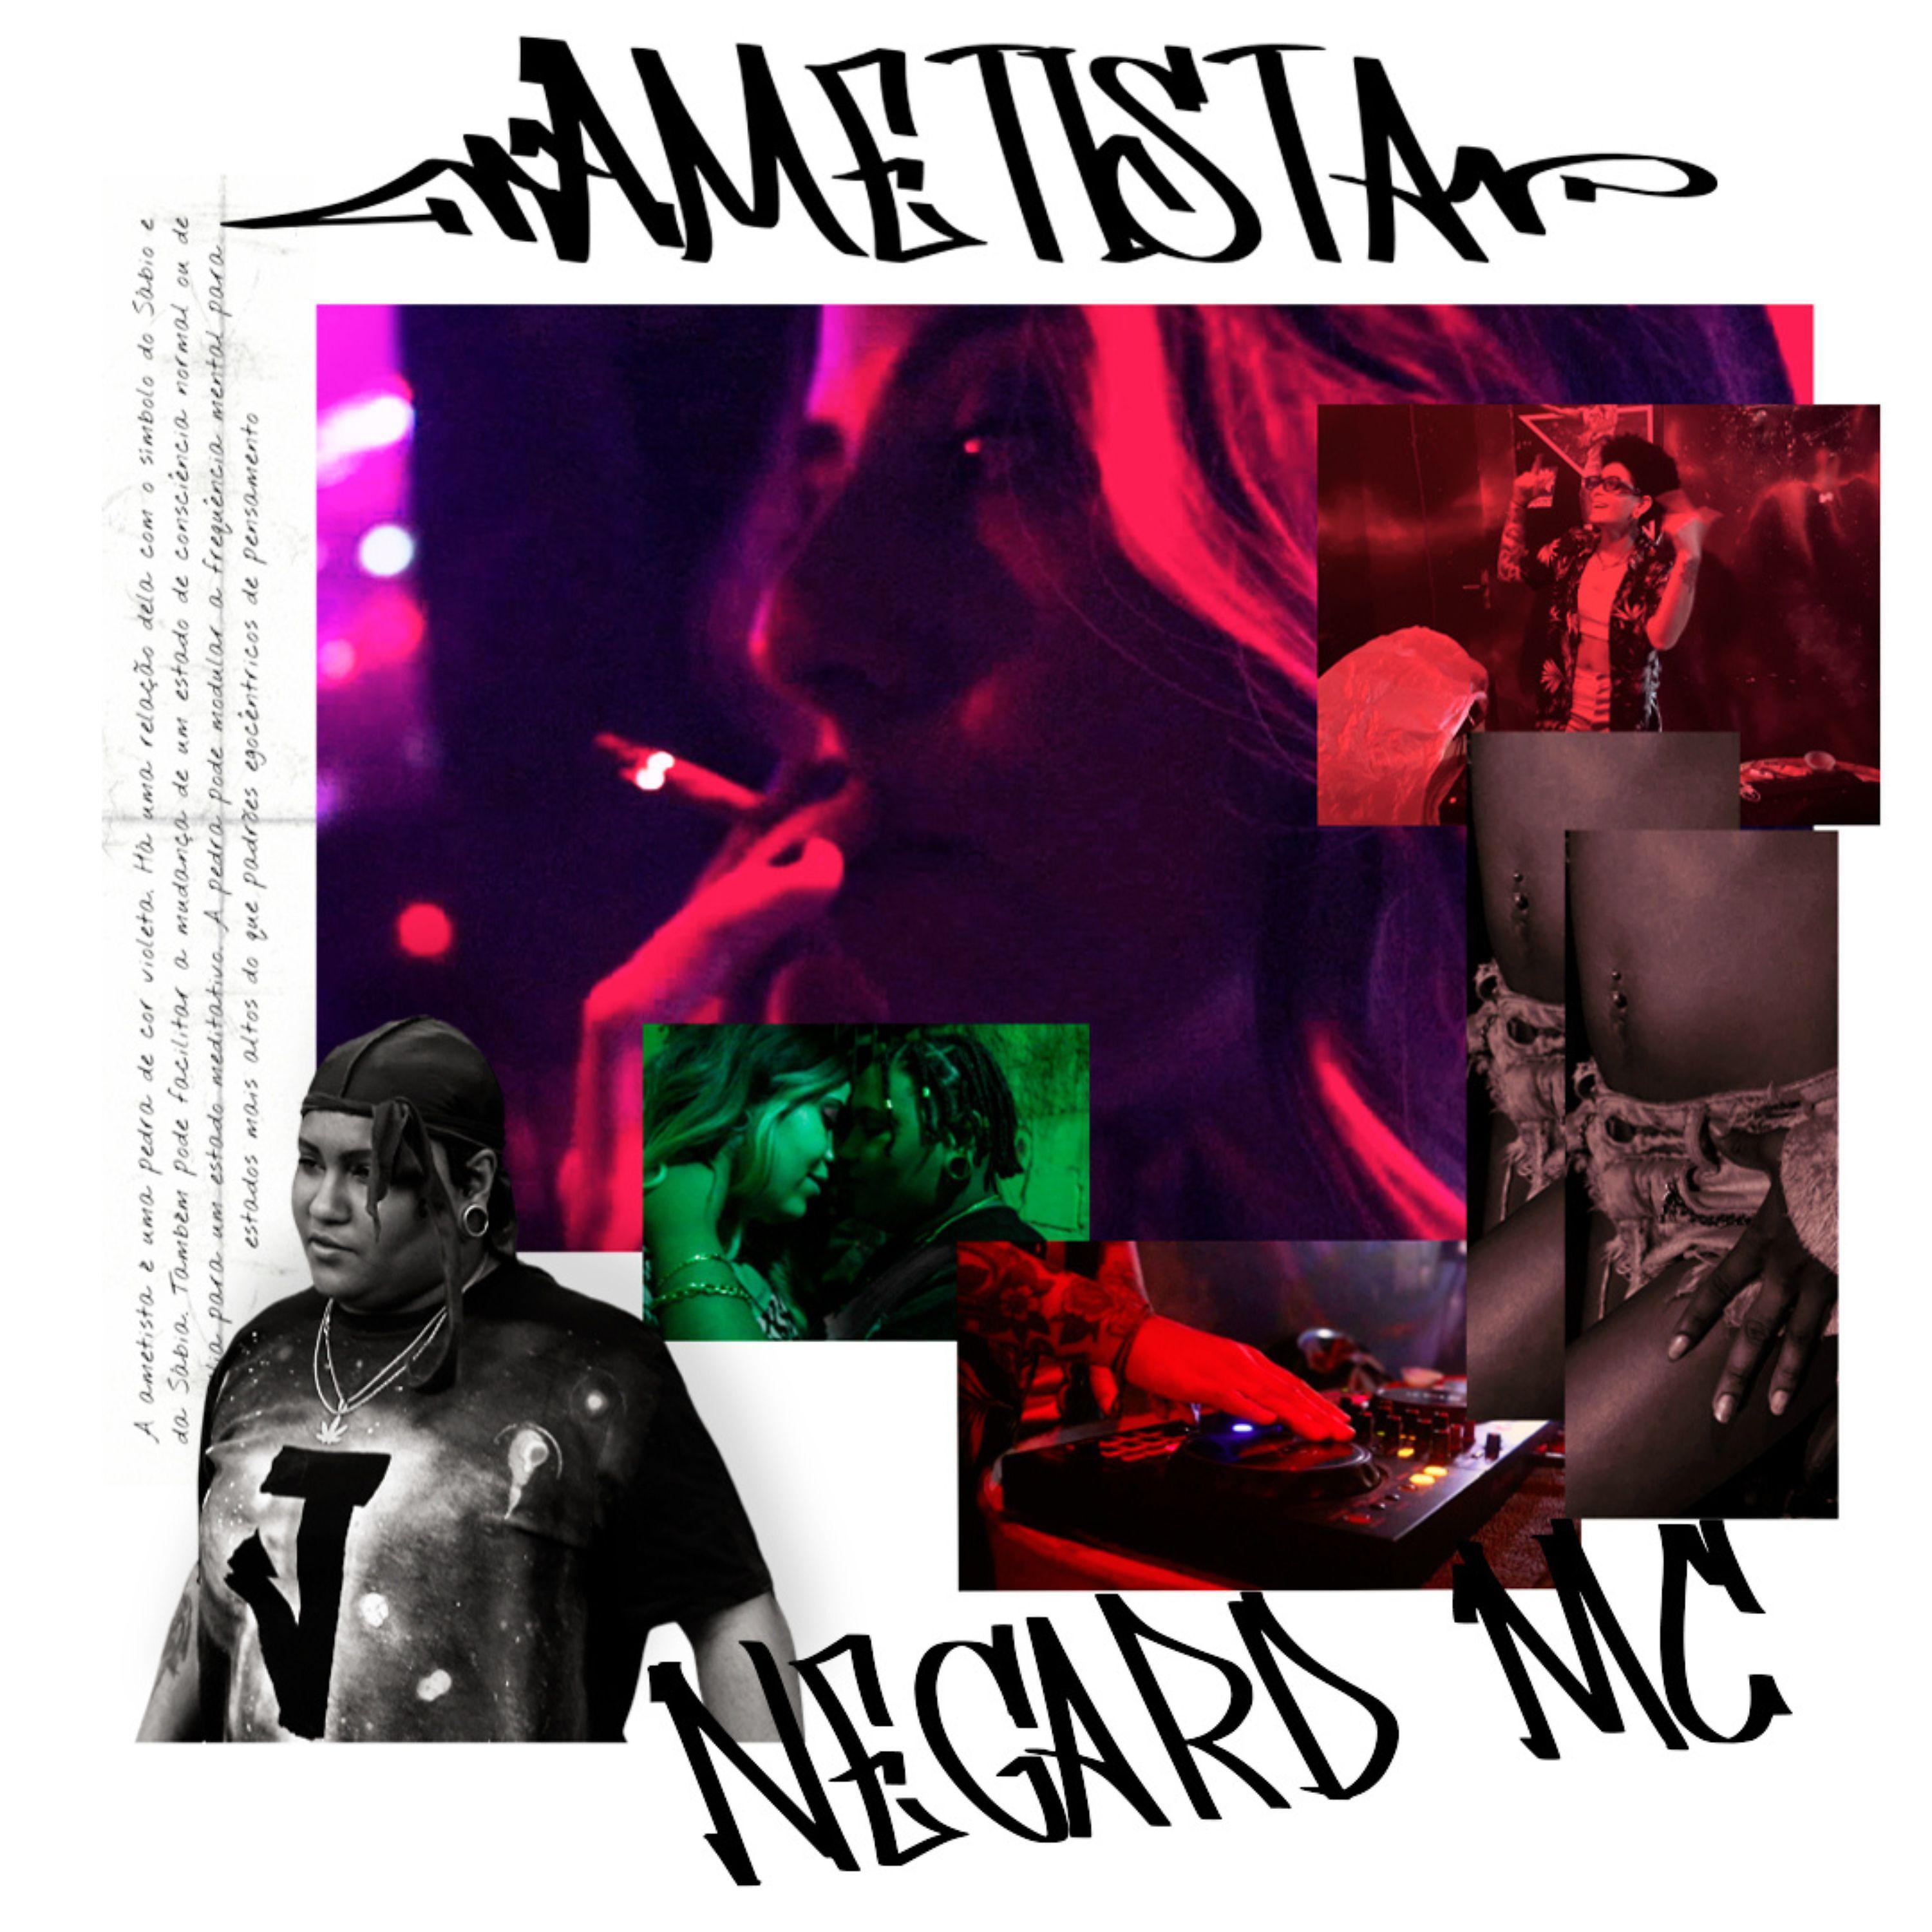 Постер альбома Ametista